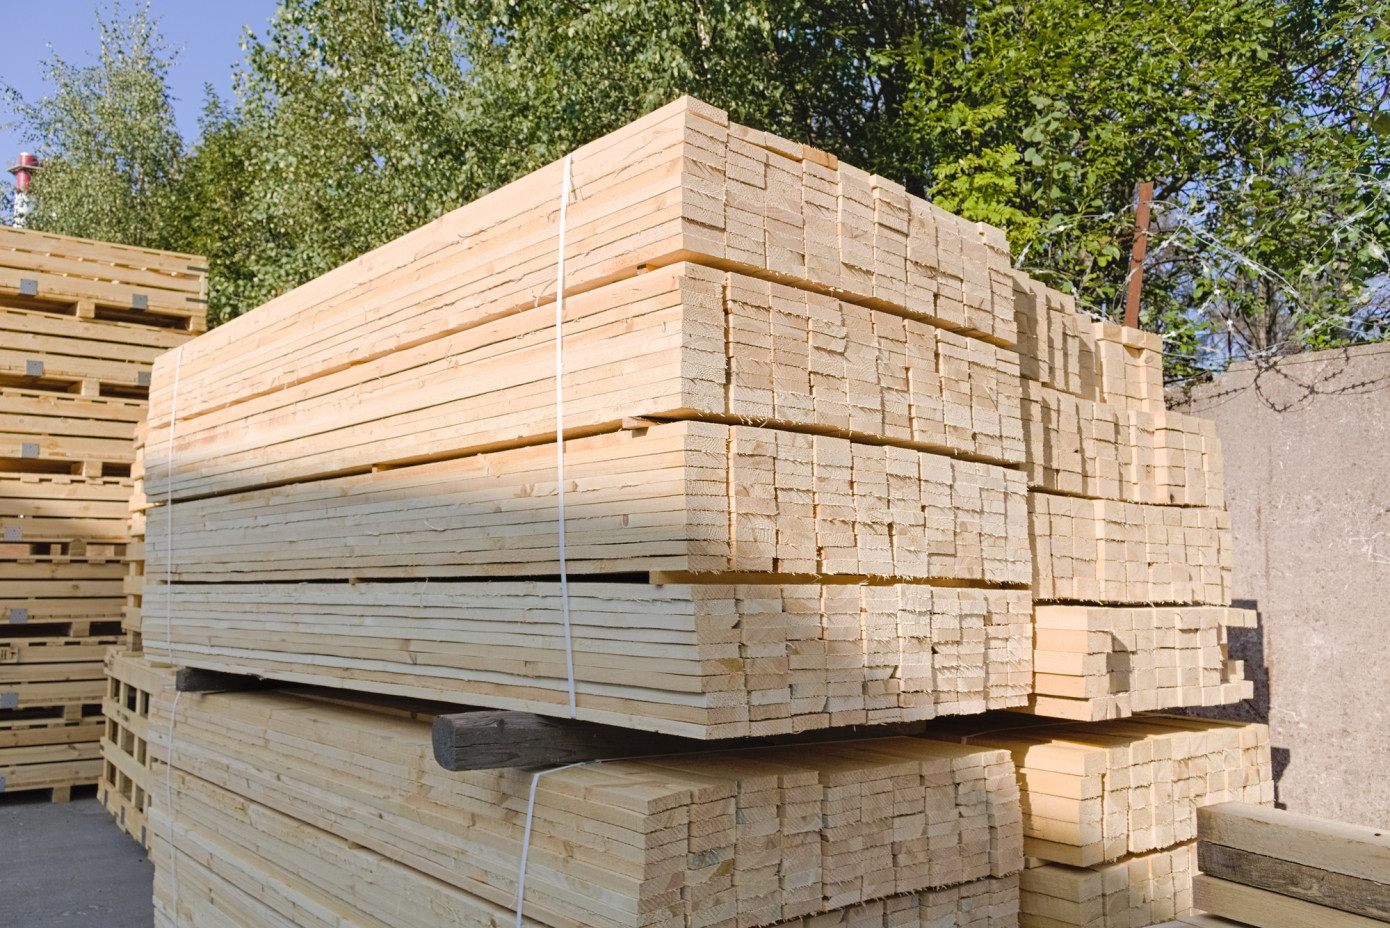 In November, UK lumber import price jumps 129.0%